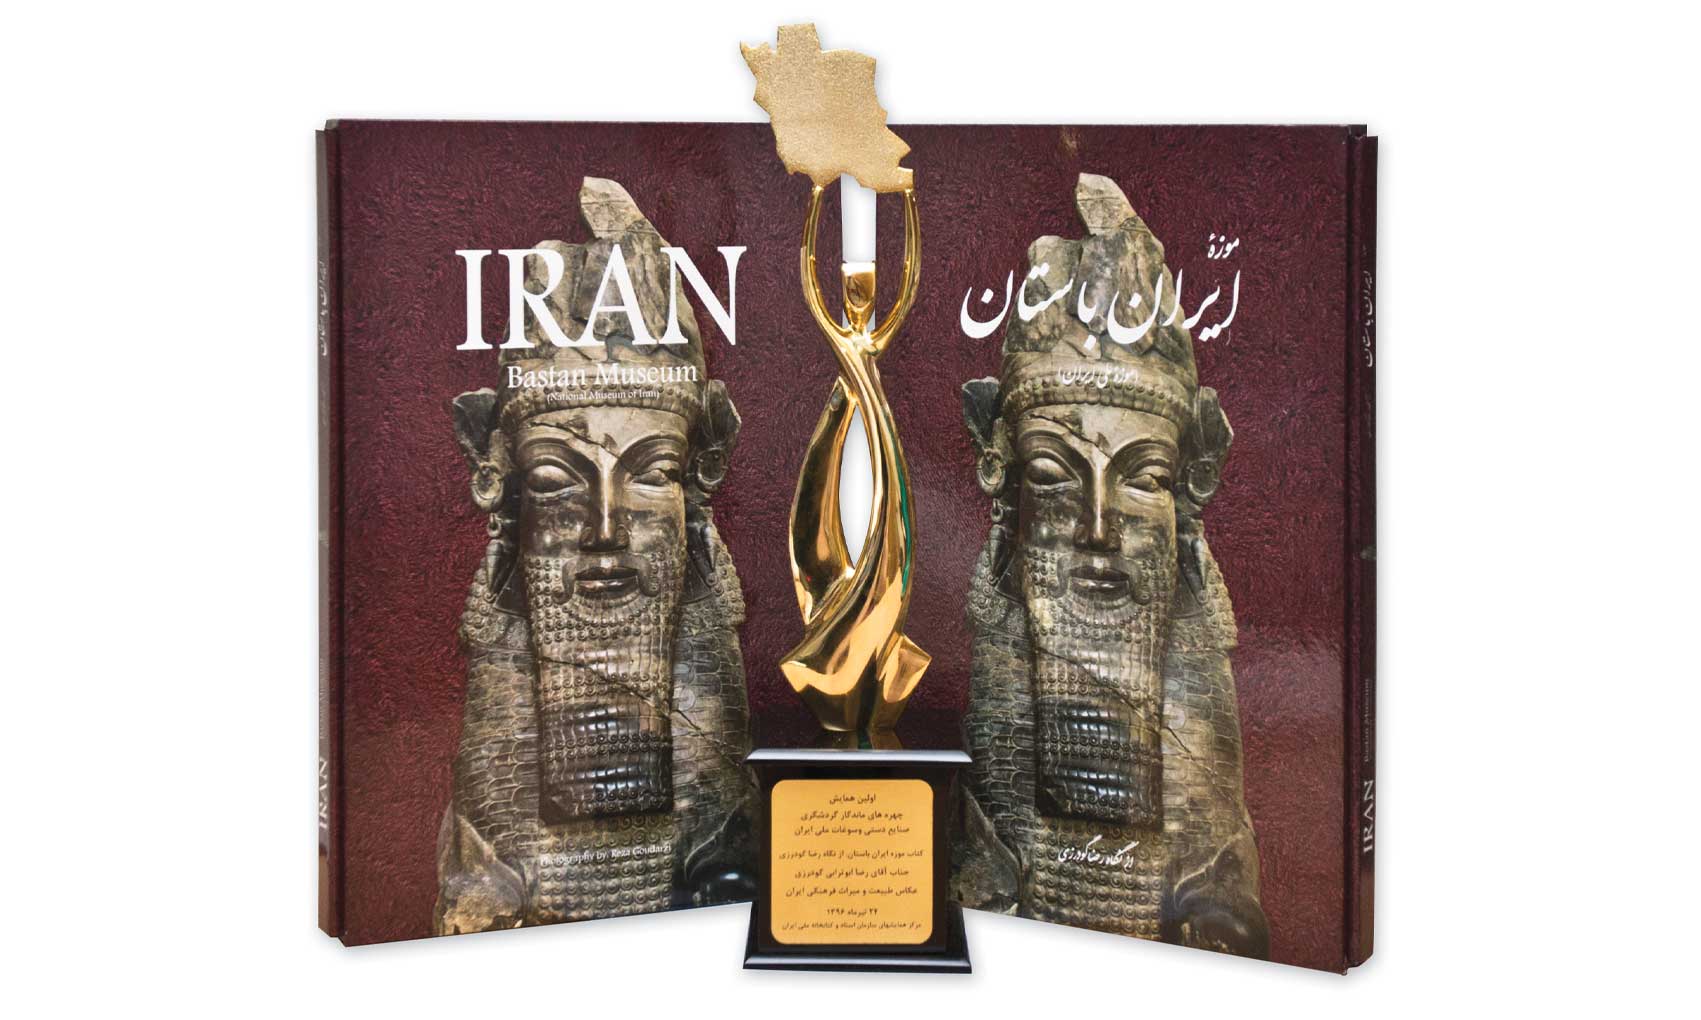 Iran bastan museum